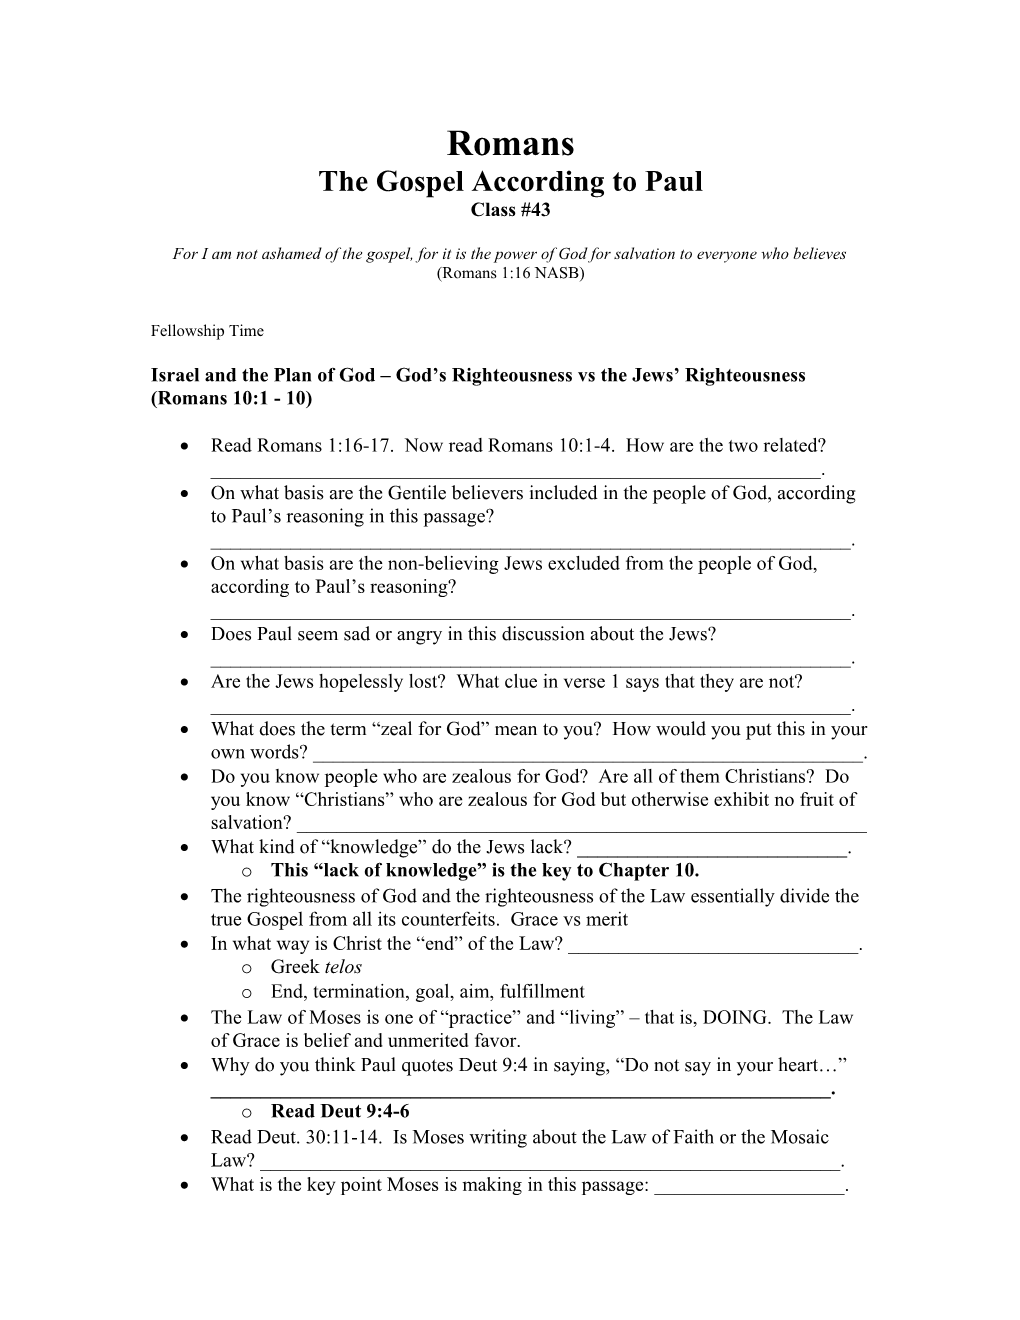 The Gospel According to Paul s1